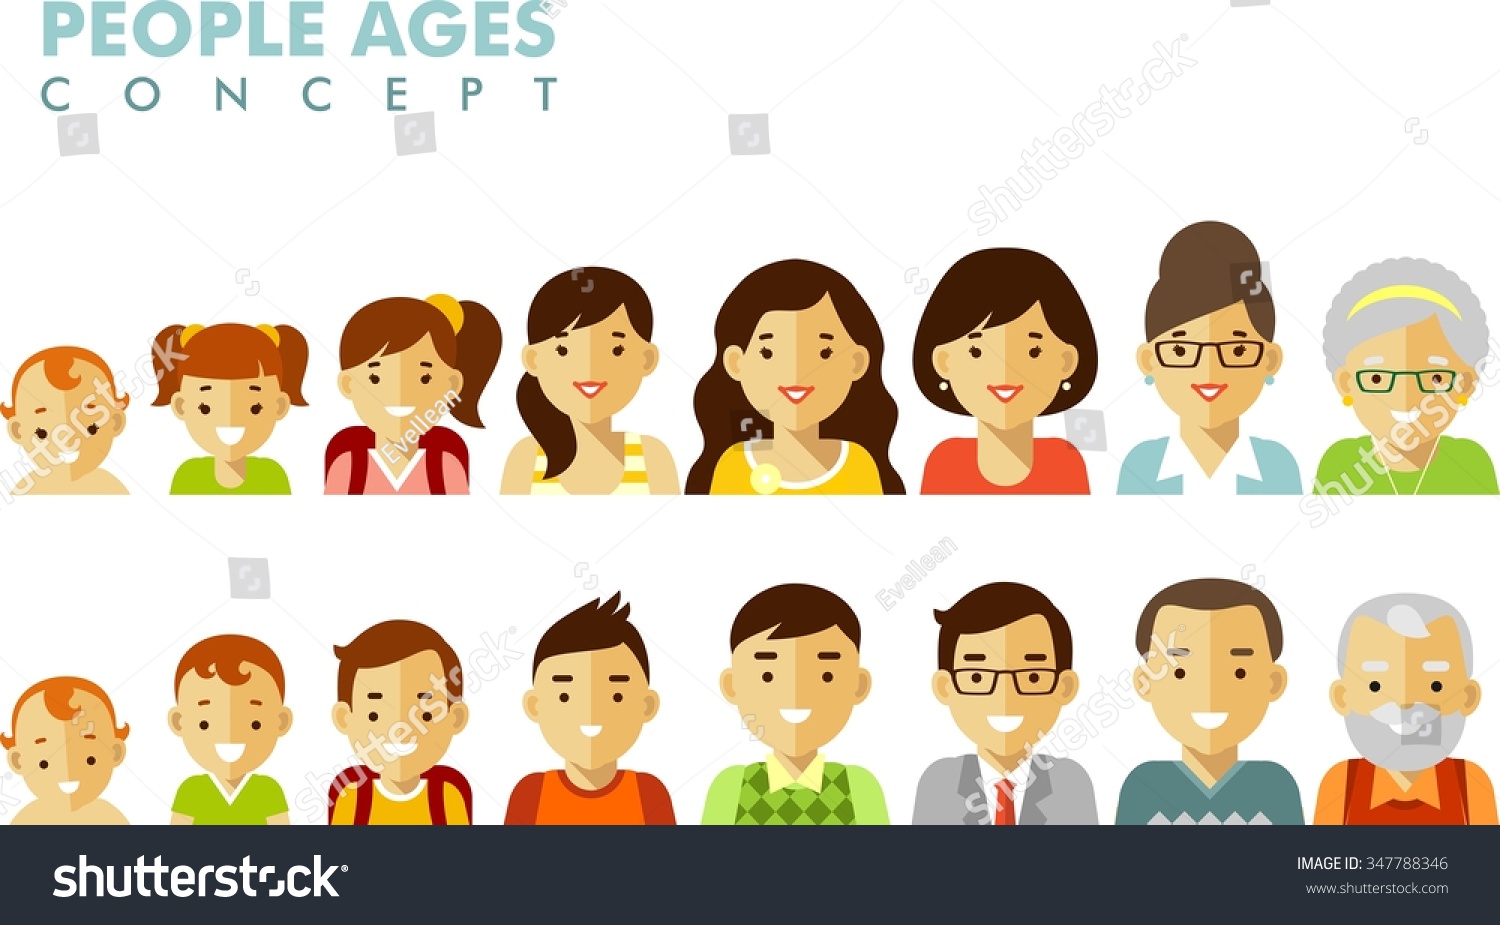 Adult Age 83